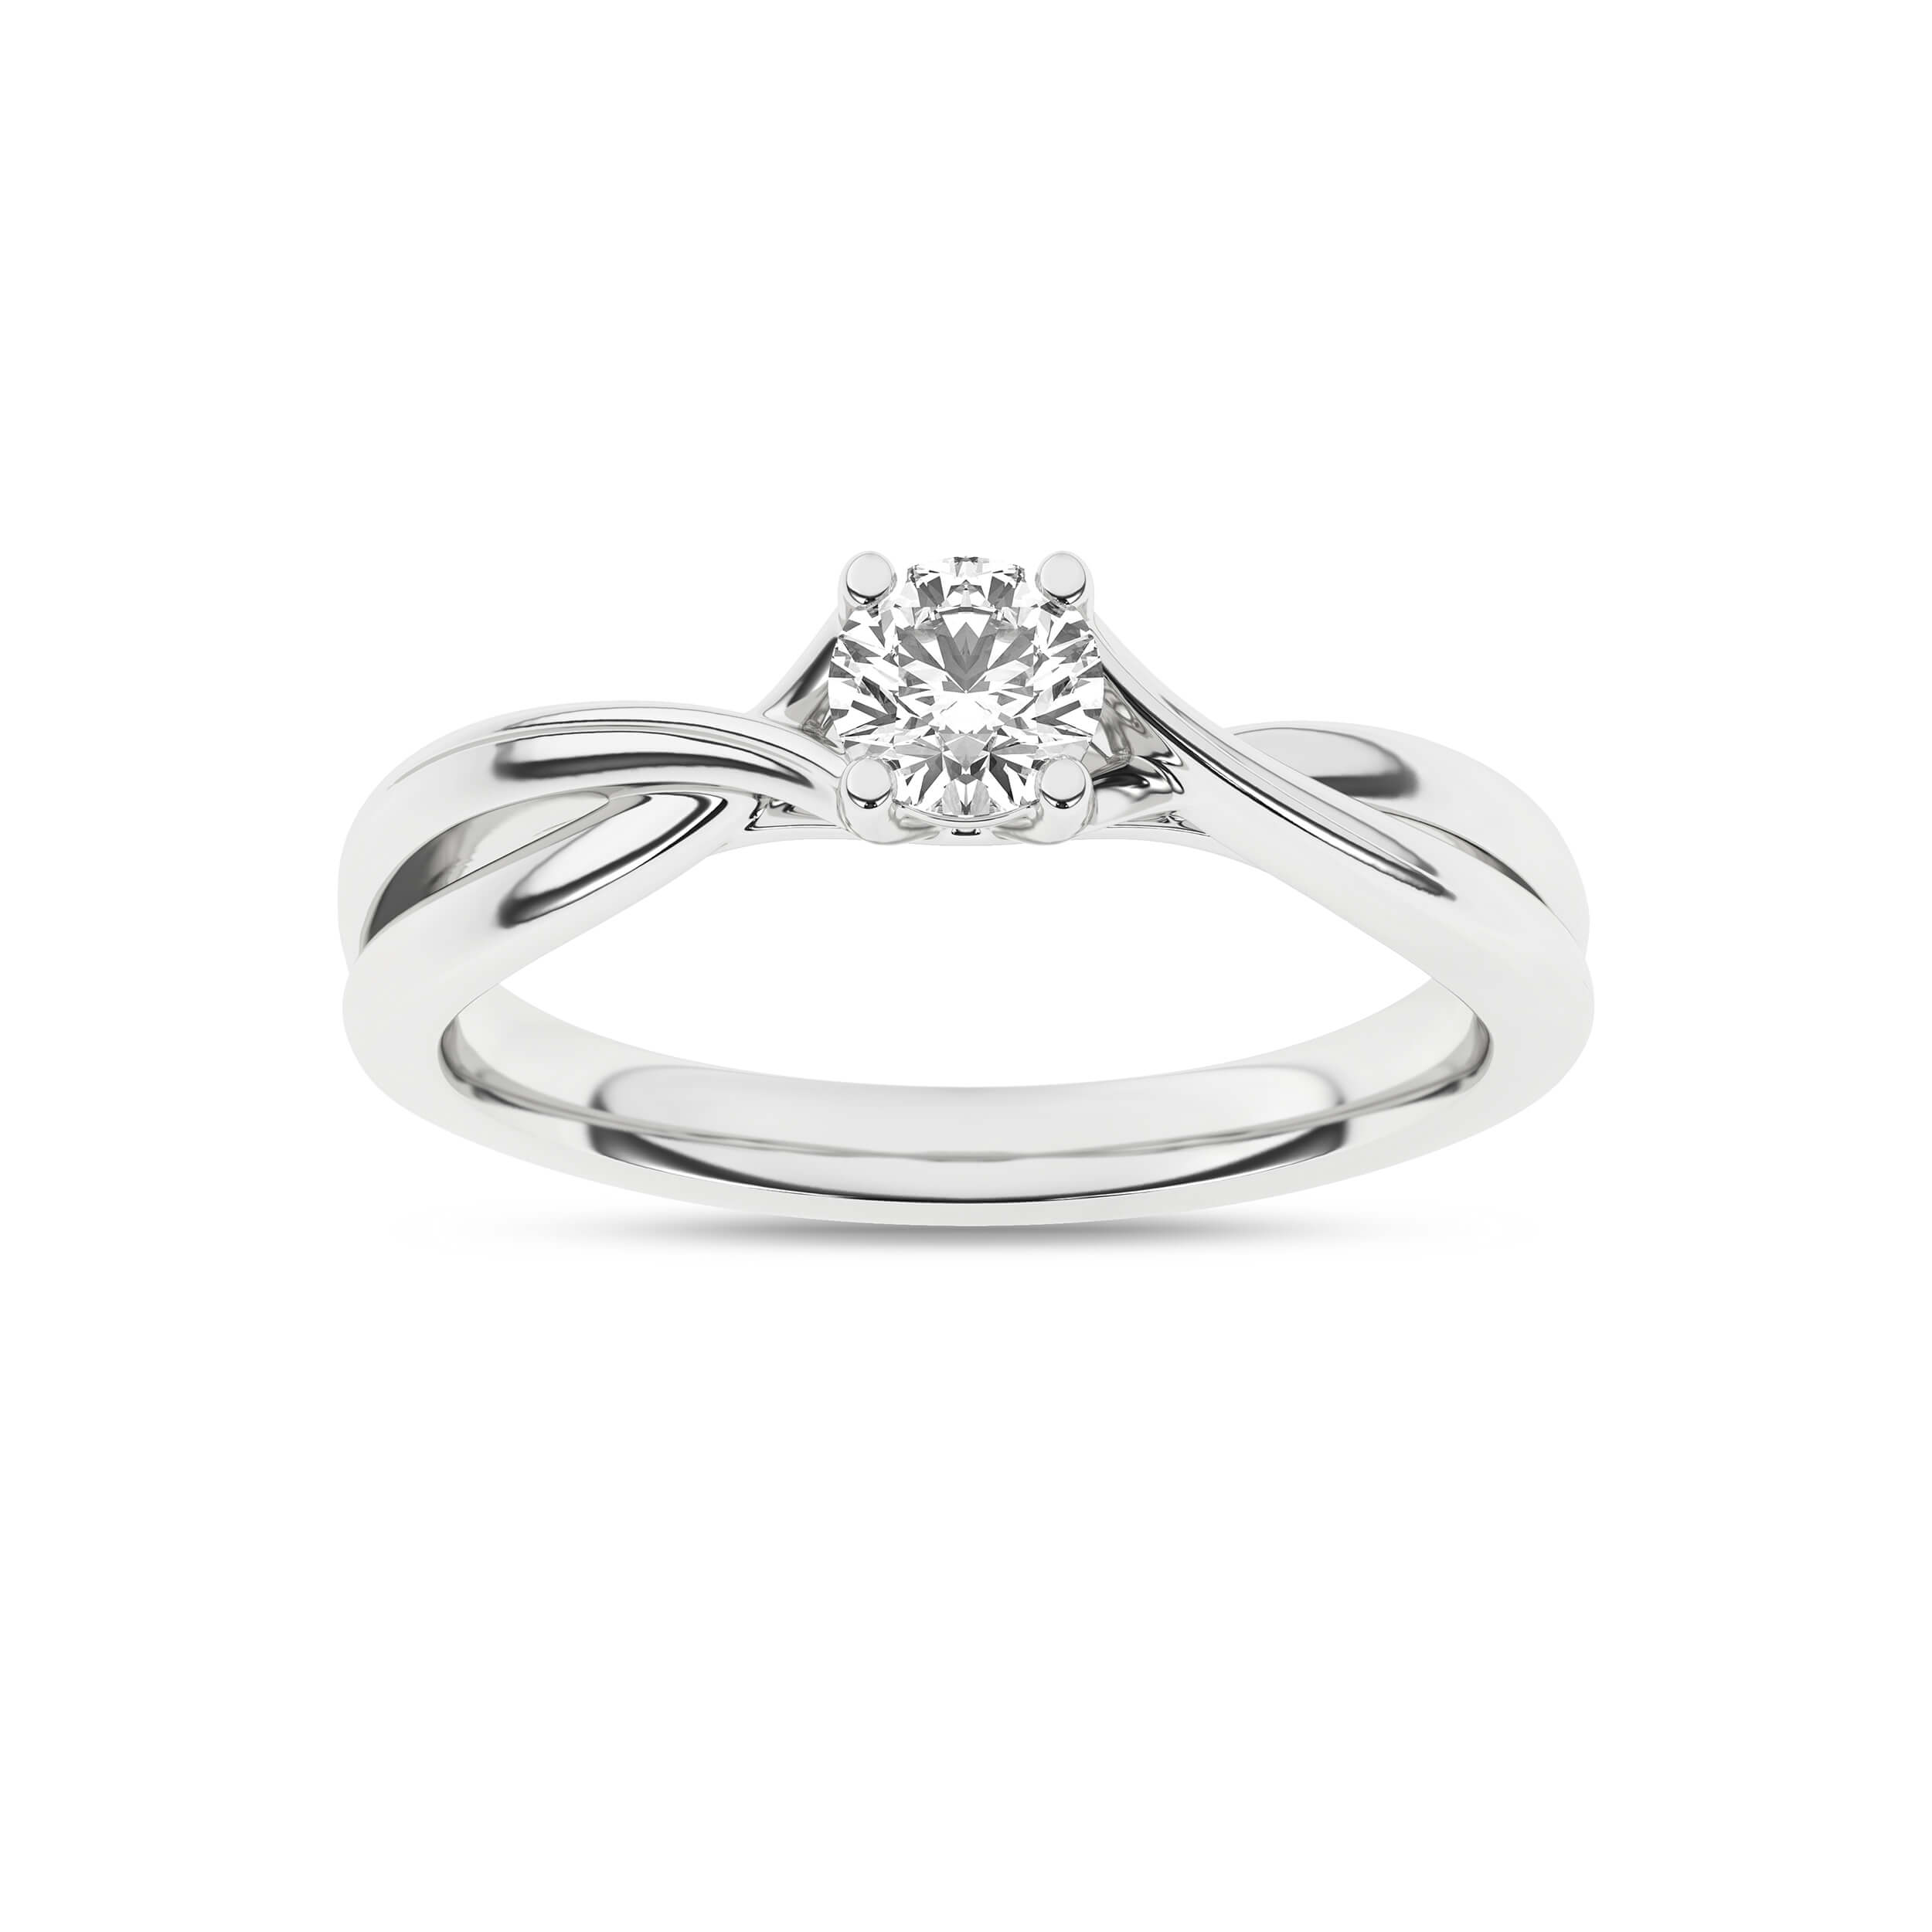 Inel de logodna din Aur Alb 14K cu Diamant 0.33Ct, articol RS1301, previzualizare foto 1